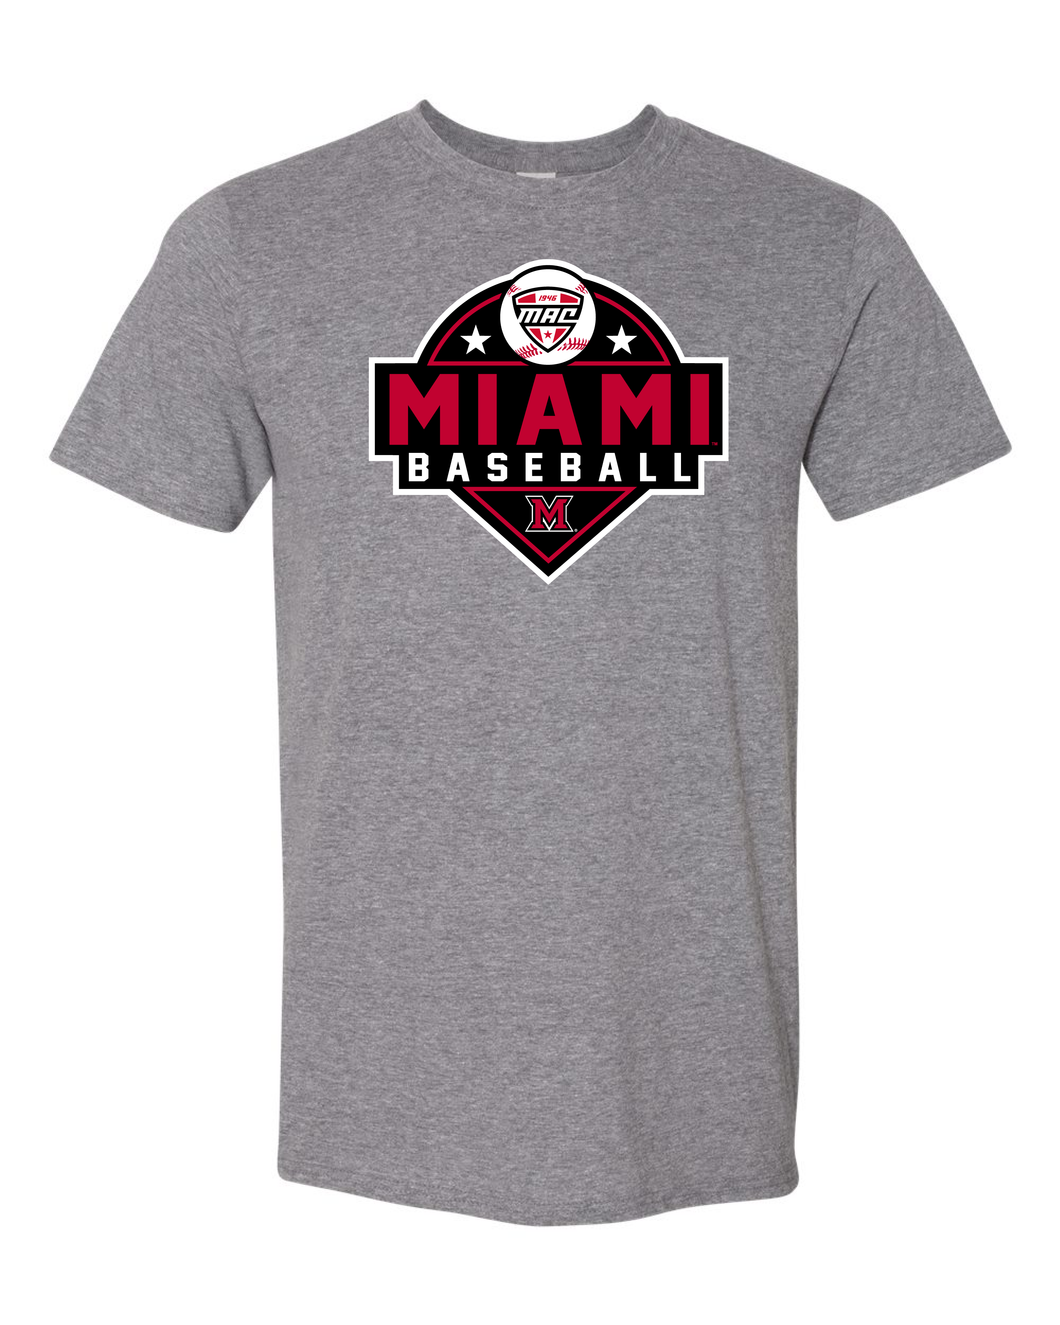 Miami of Ohio Baseball Unisex T-shirt